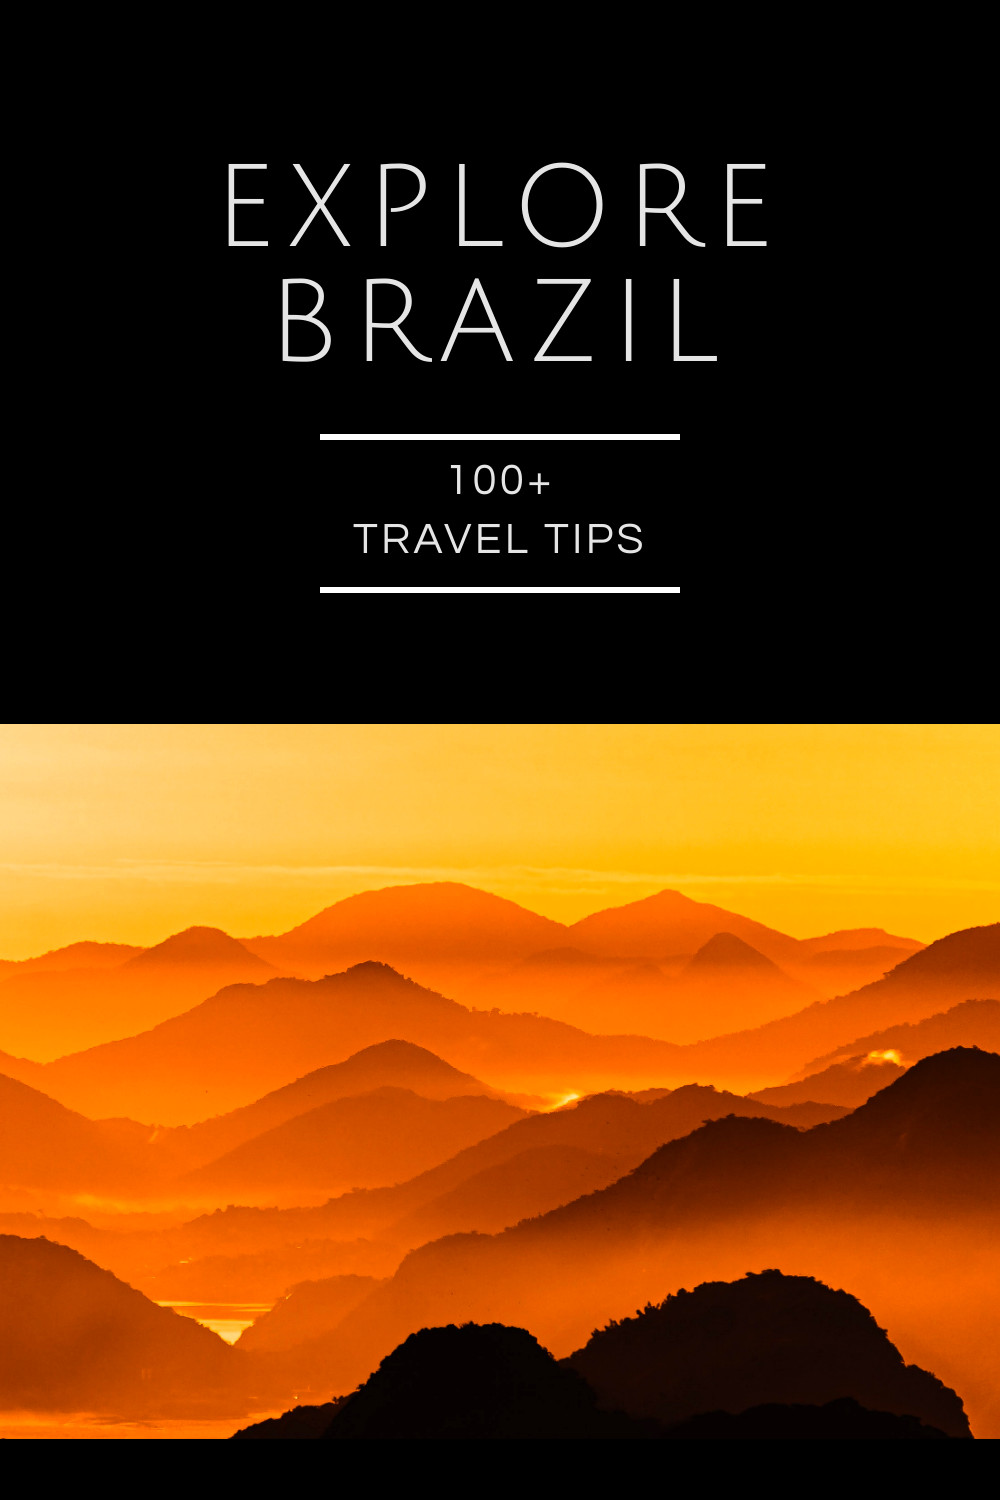 Travel Tips to Explore Brazil 